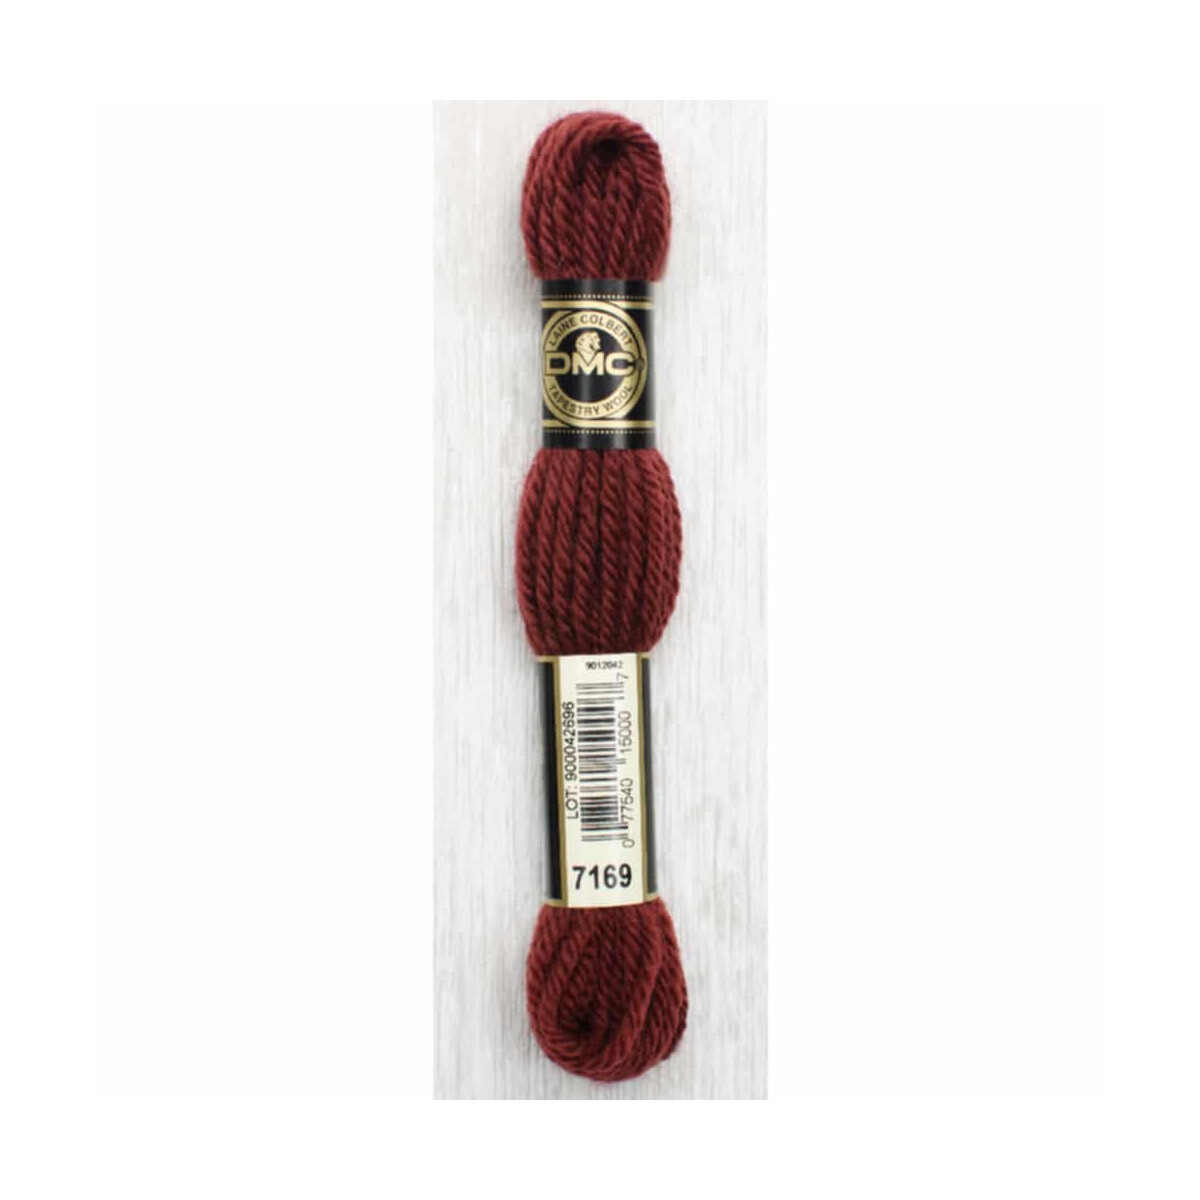 DMC Laine Colbert wool, 8m, 486-7169